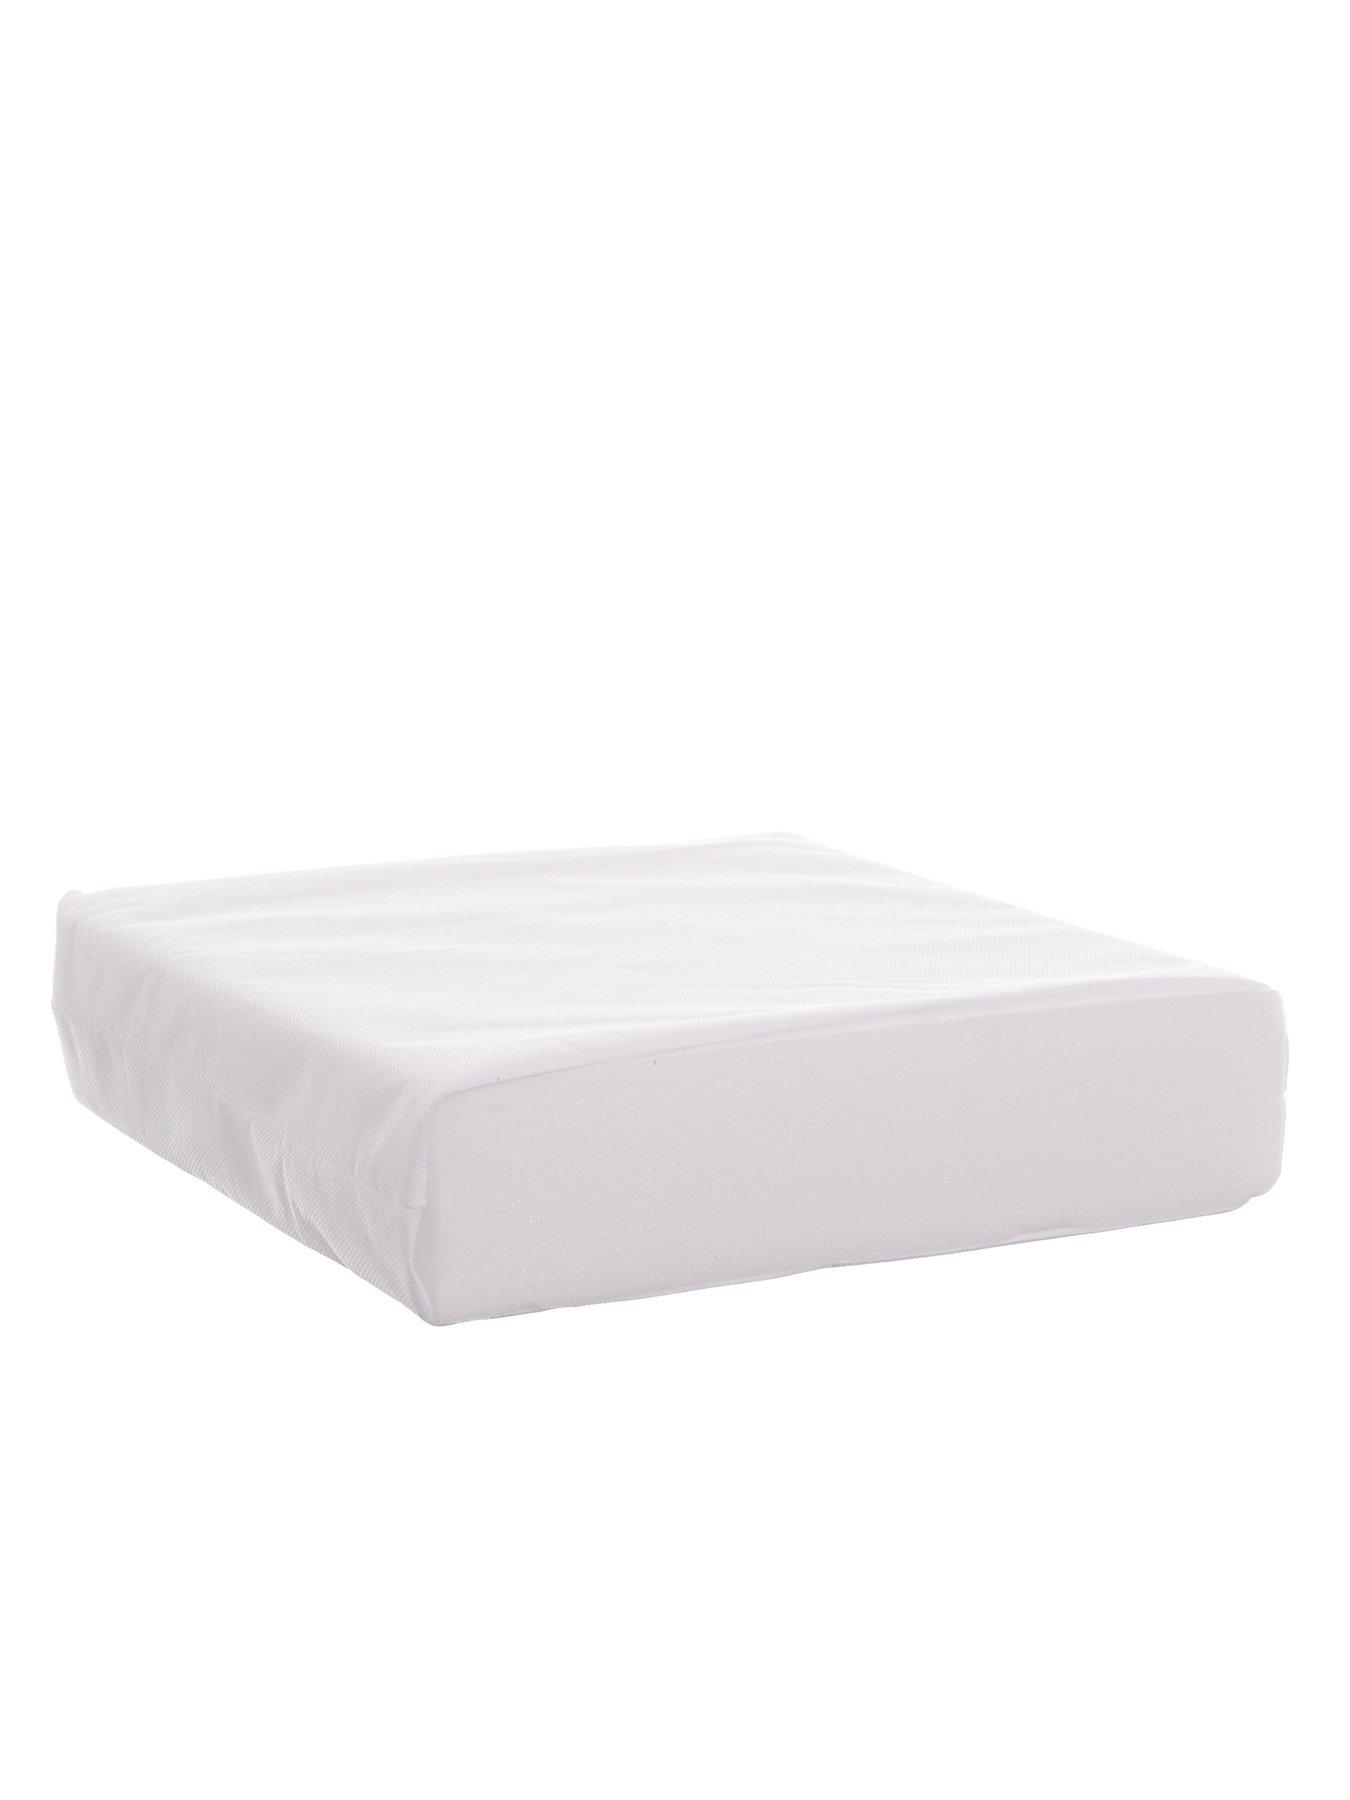 buy cot bed mattress